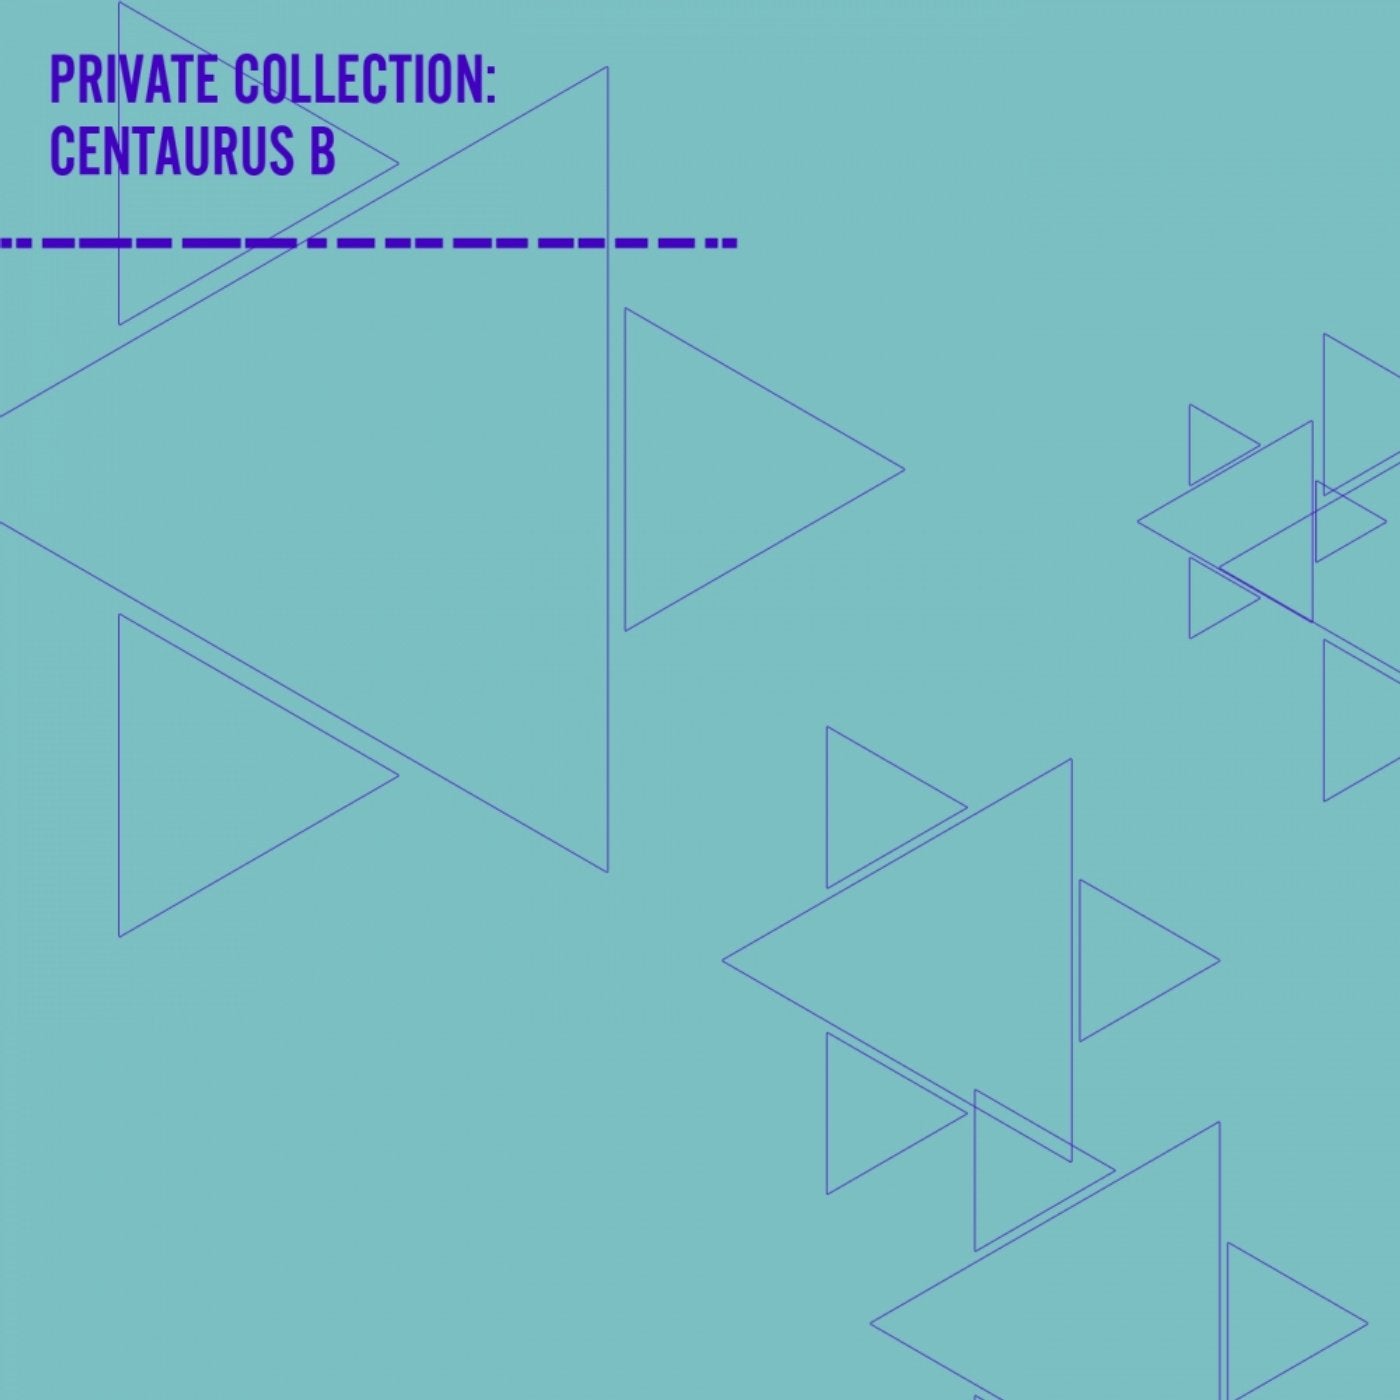 Private Collection: Centaurus B